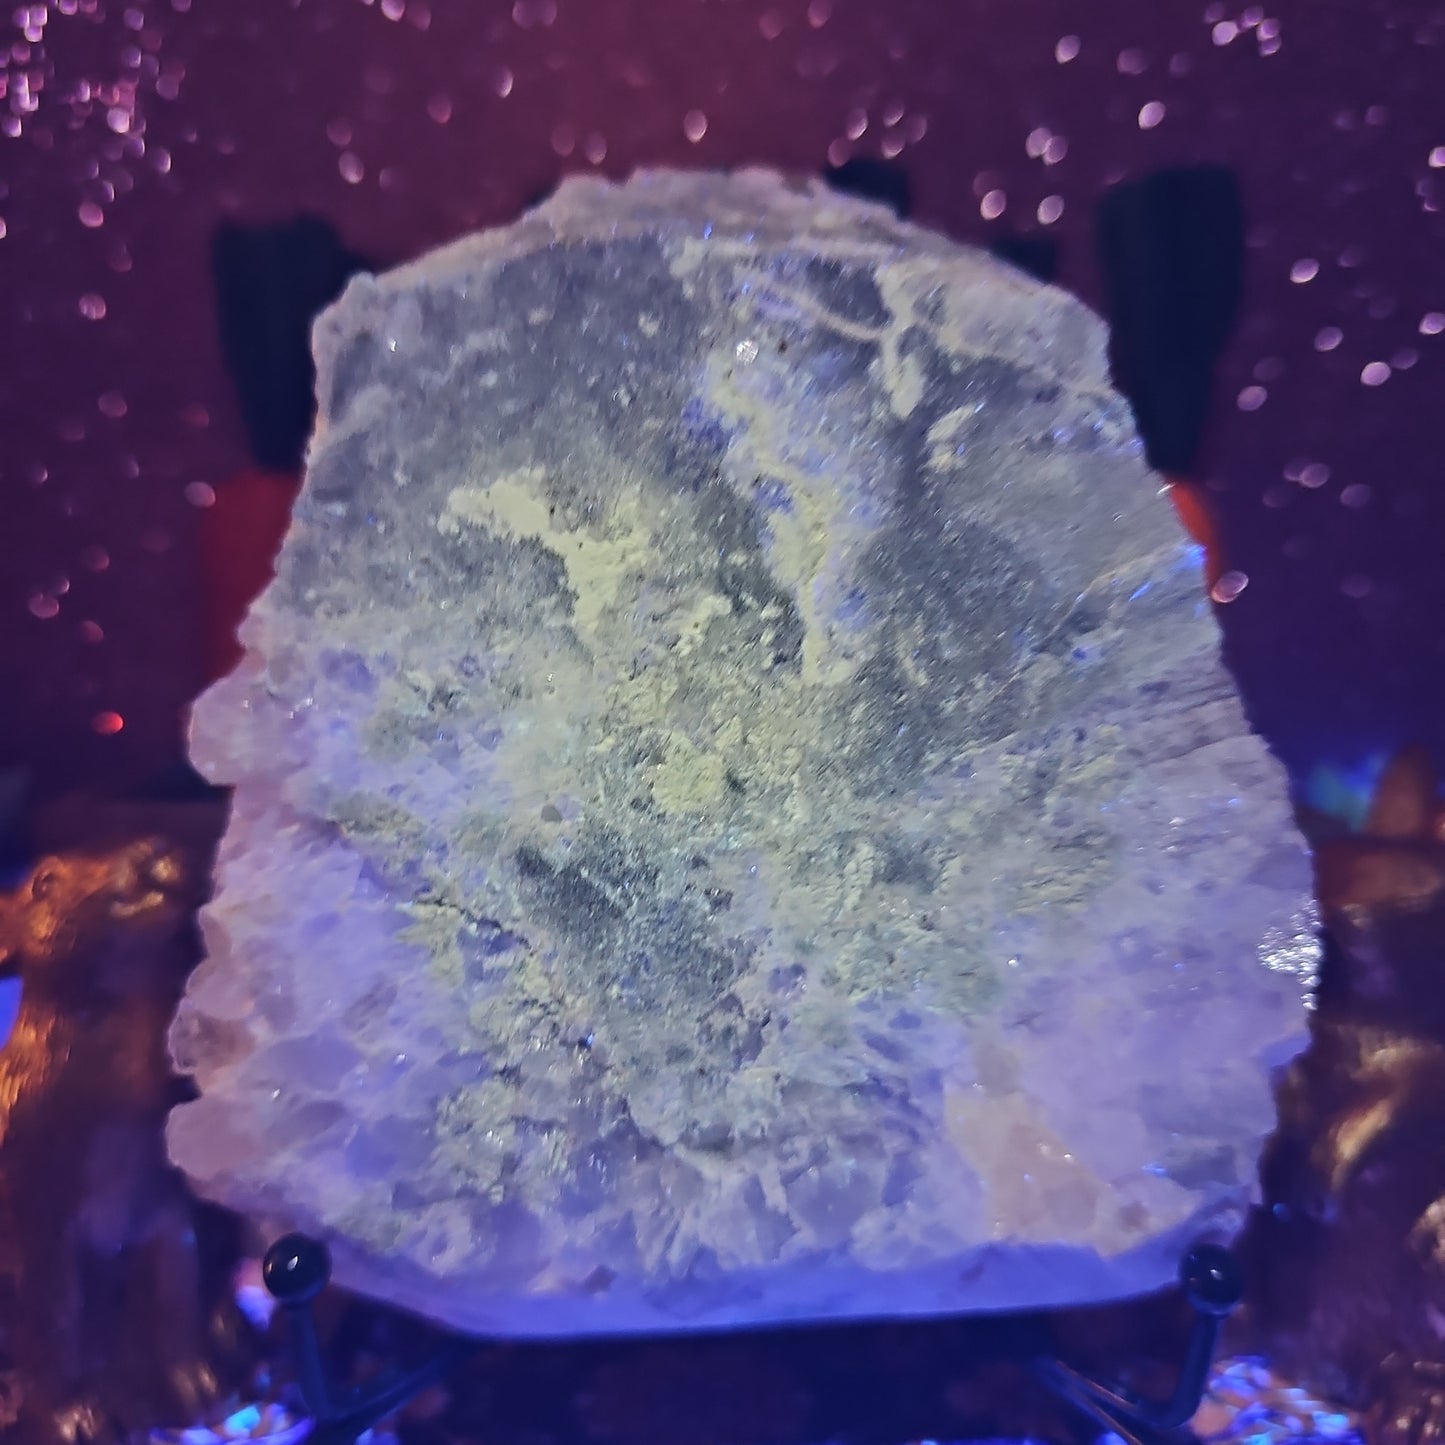 Fluorite Calcite "Sharkhead" Shaped Specimen